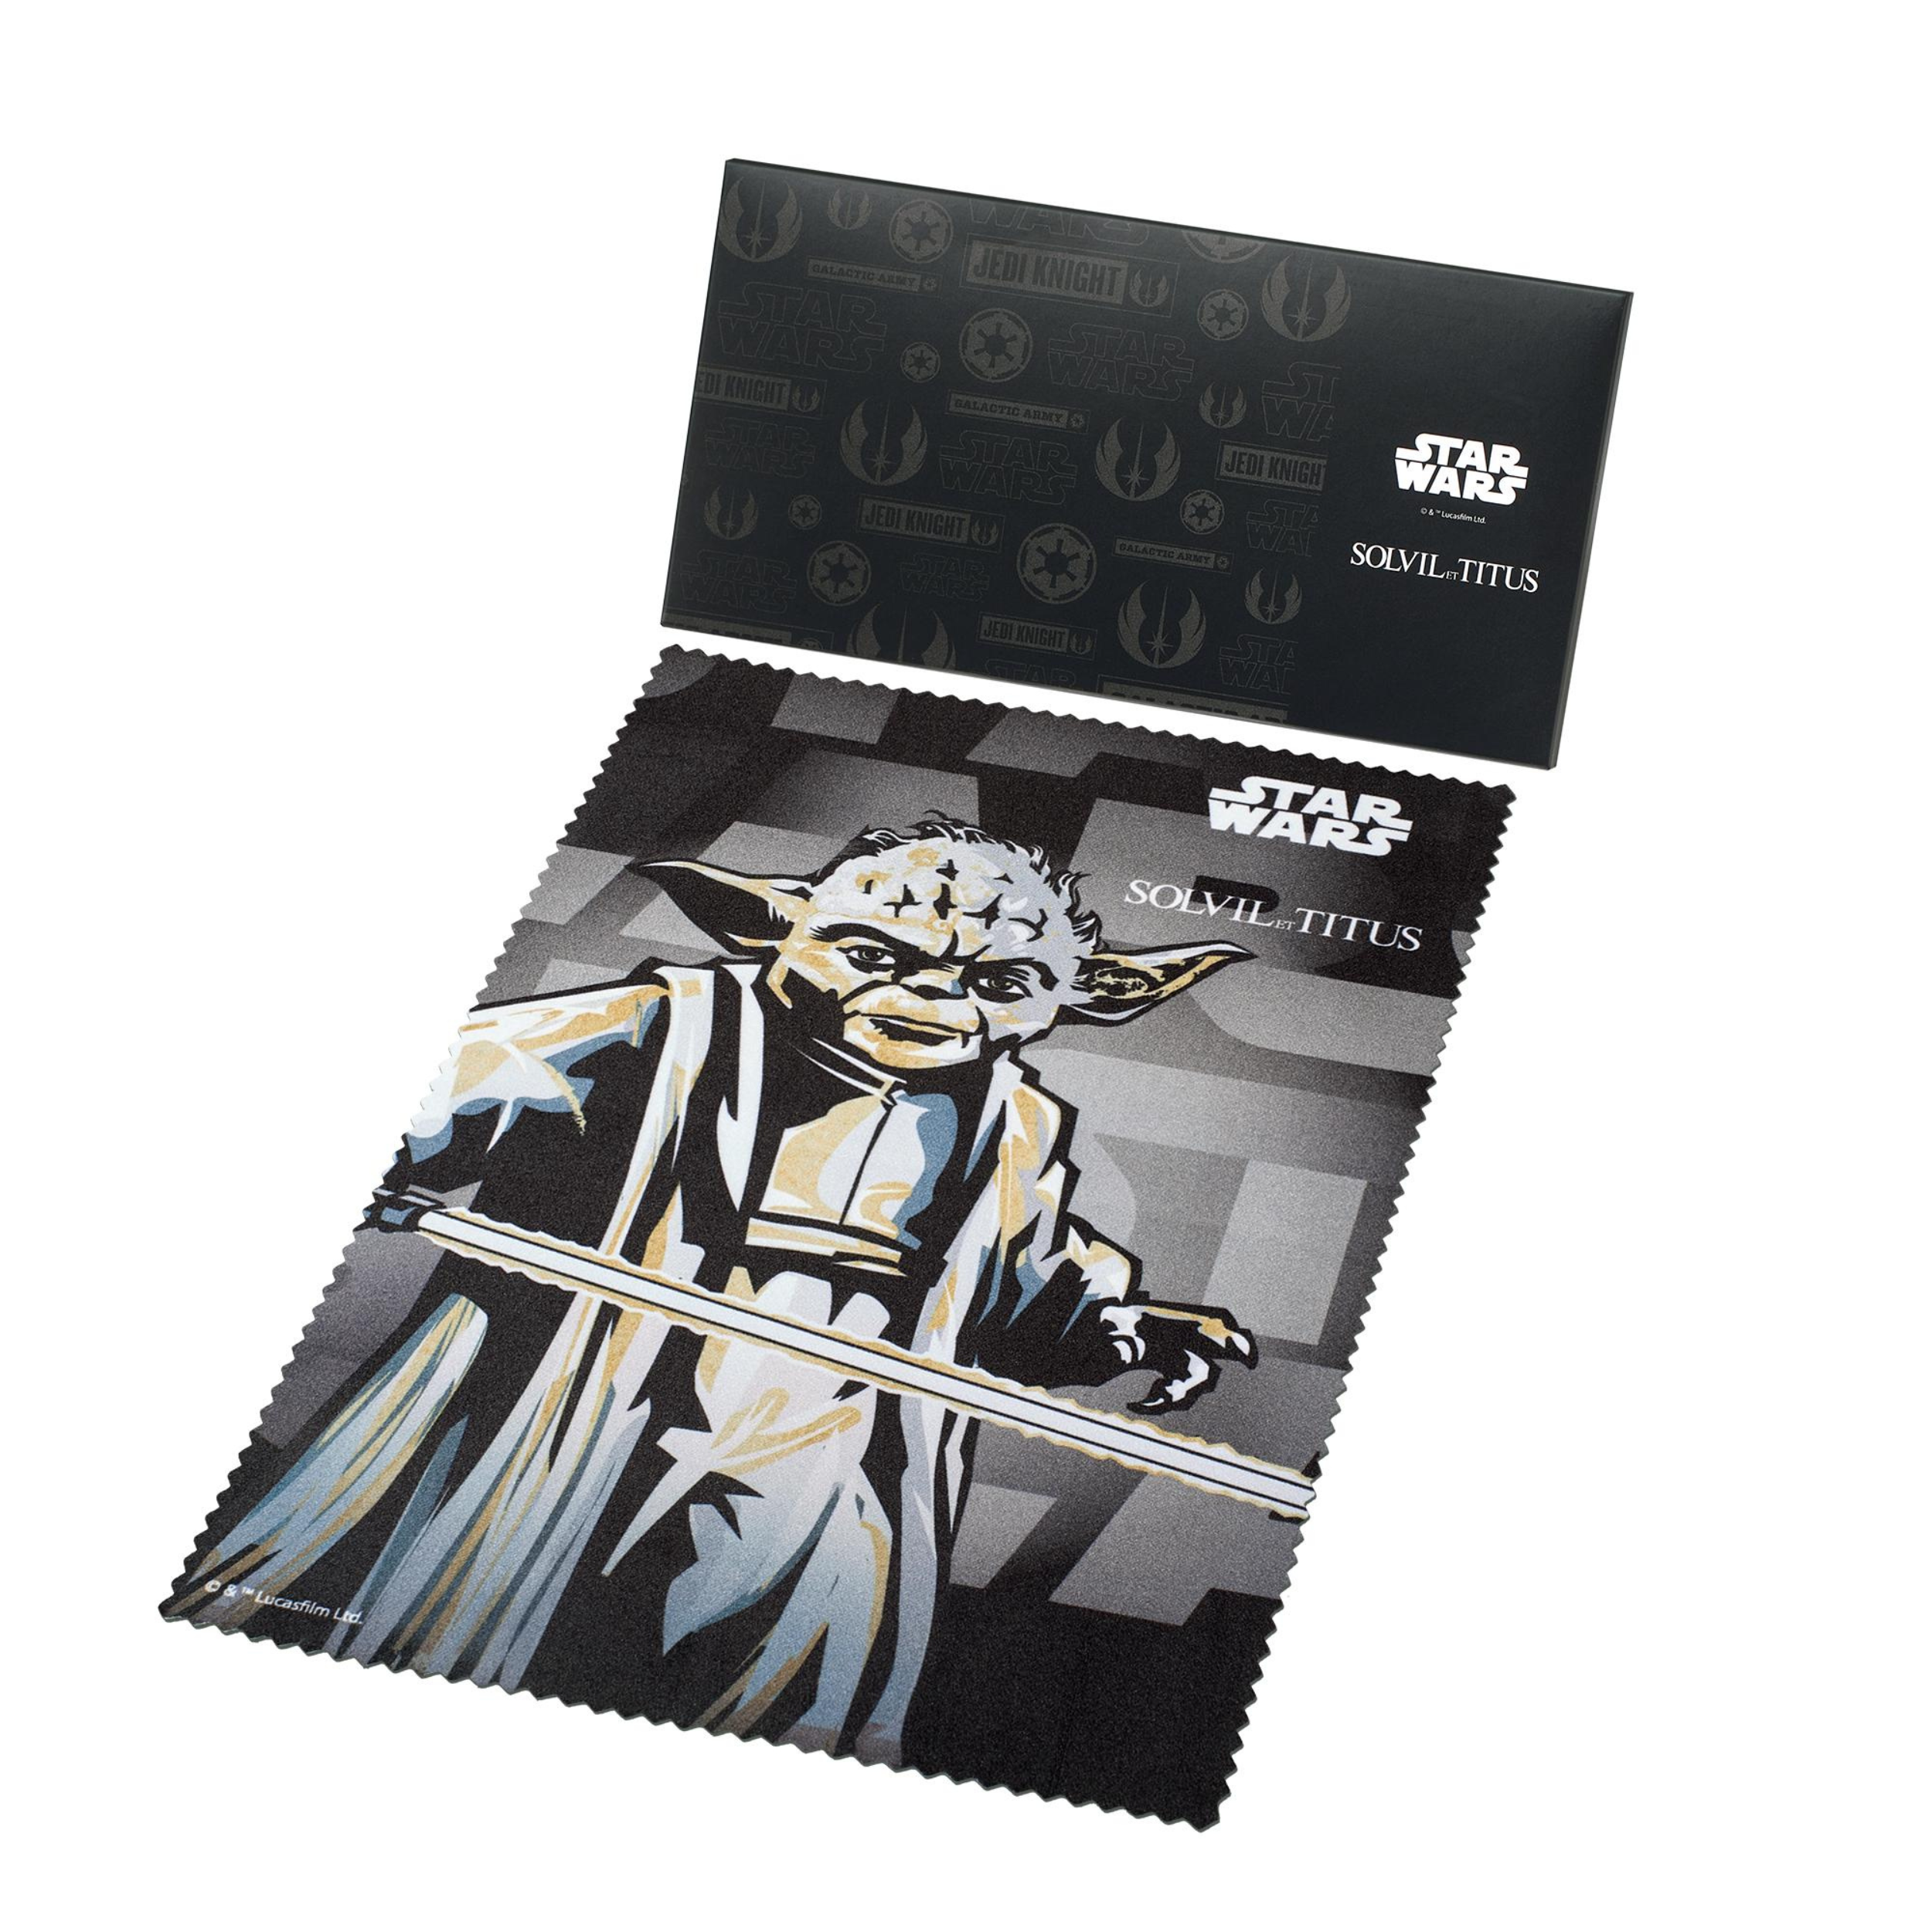 [Pre-Order] Solvil et Titus x Star Wars Limited Edition Saber "Master Yoda" Chronograph Watch W06-03365-006